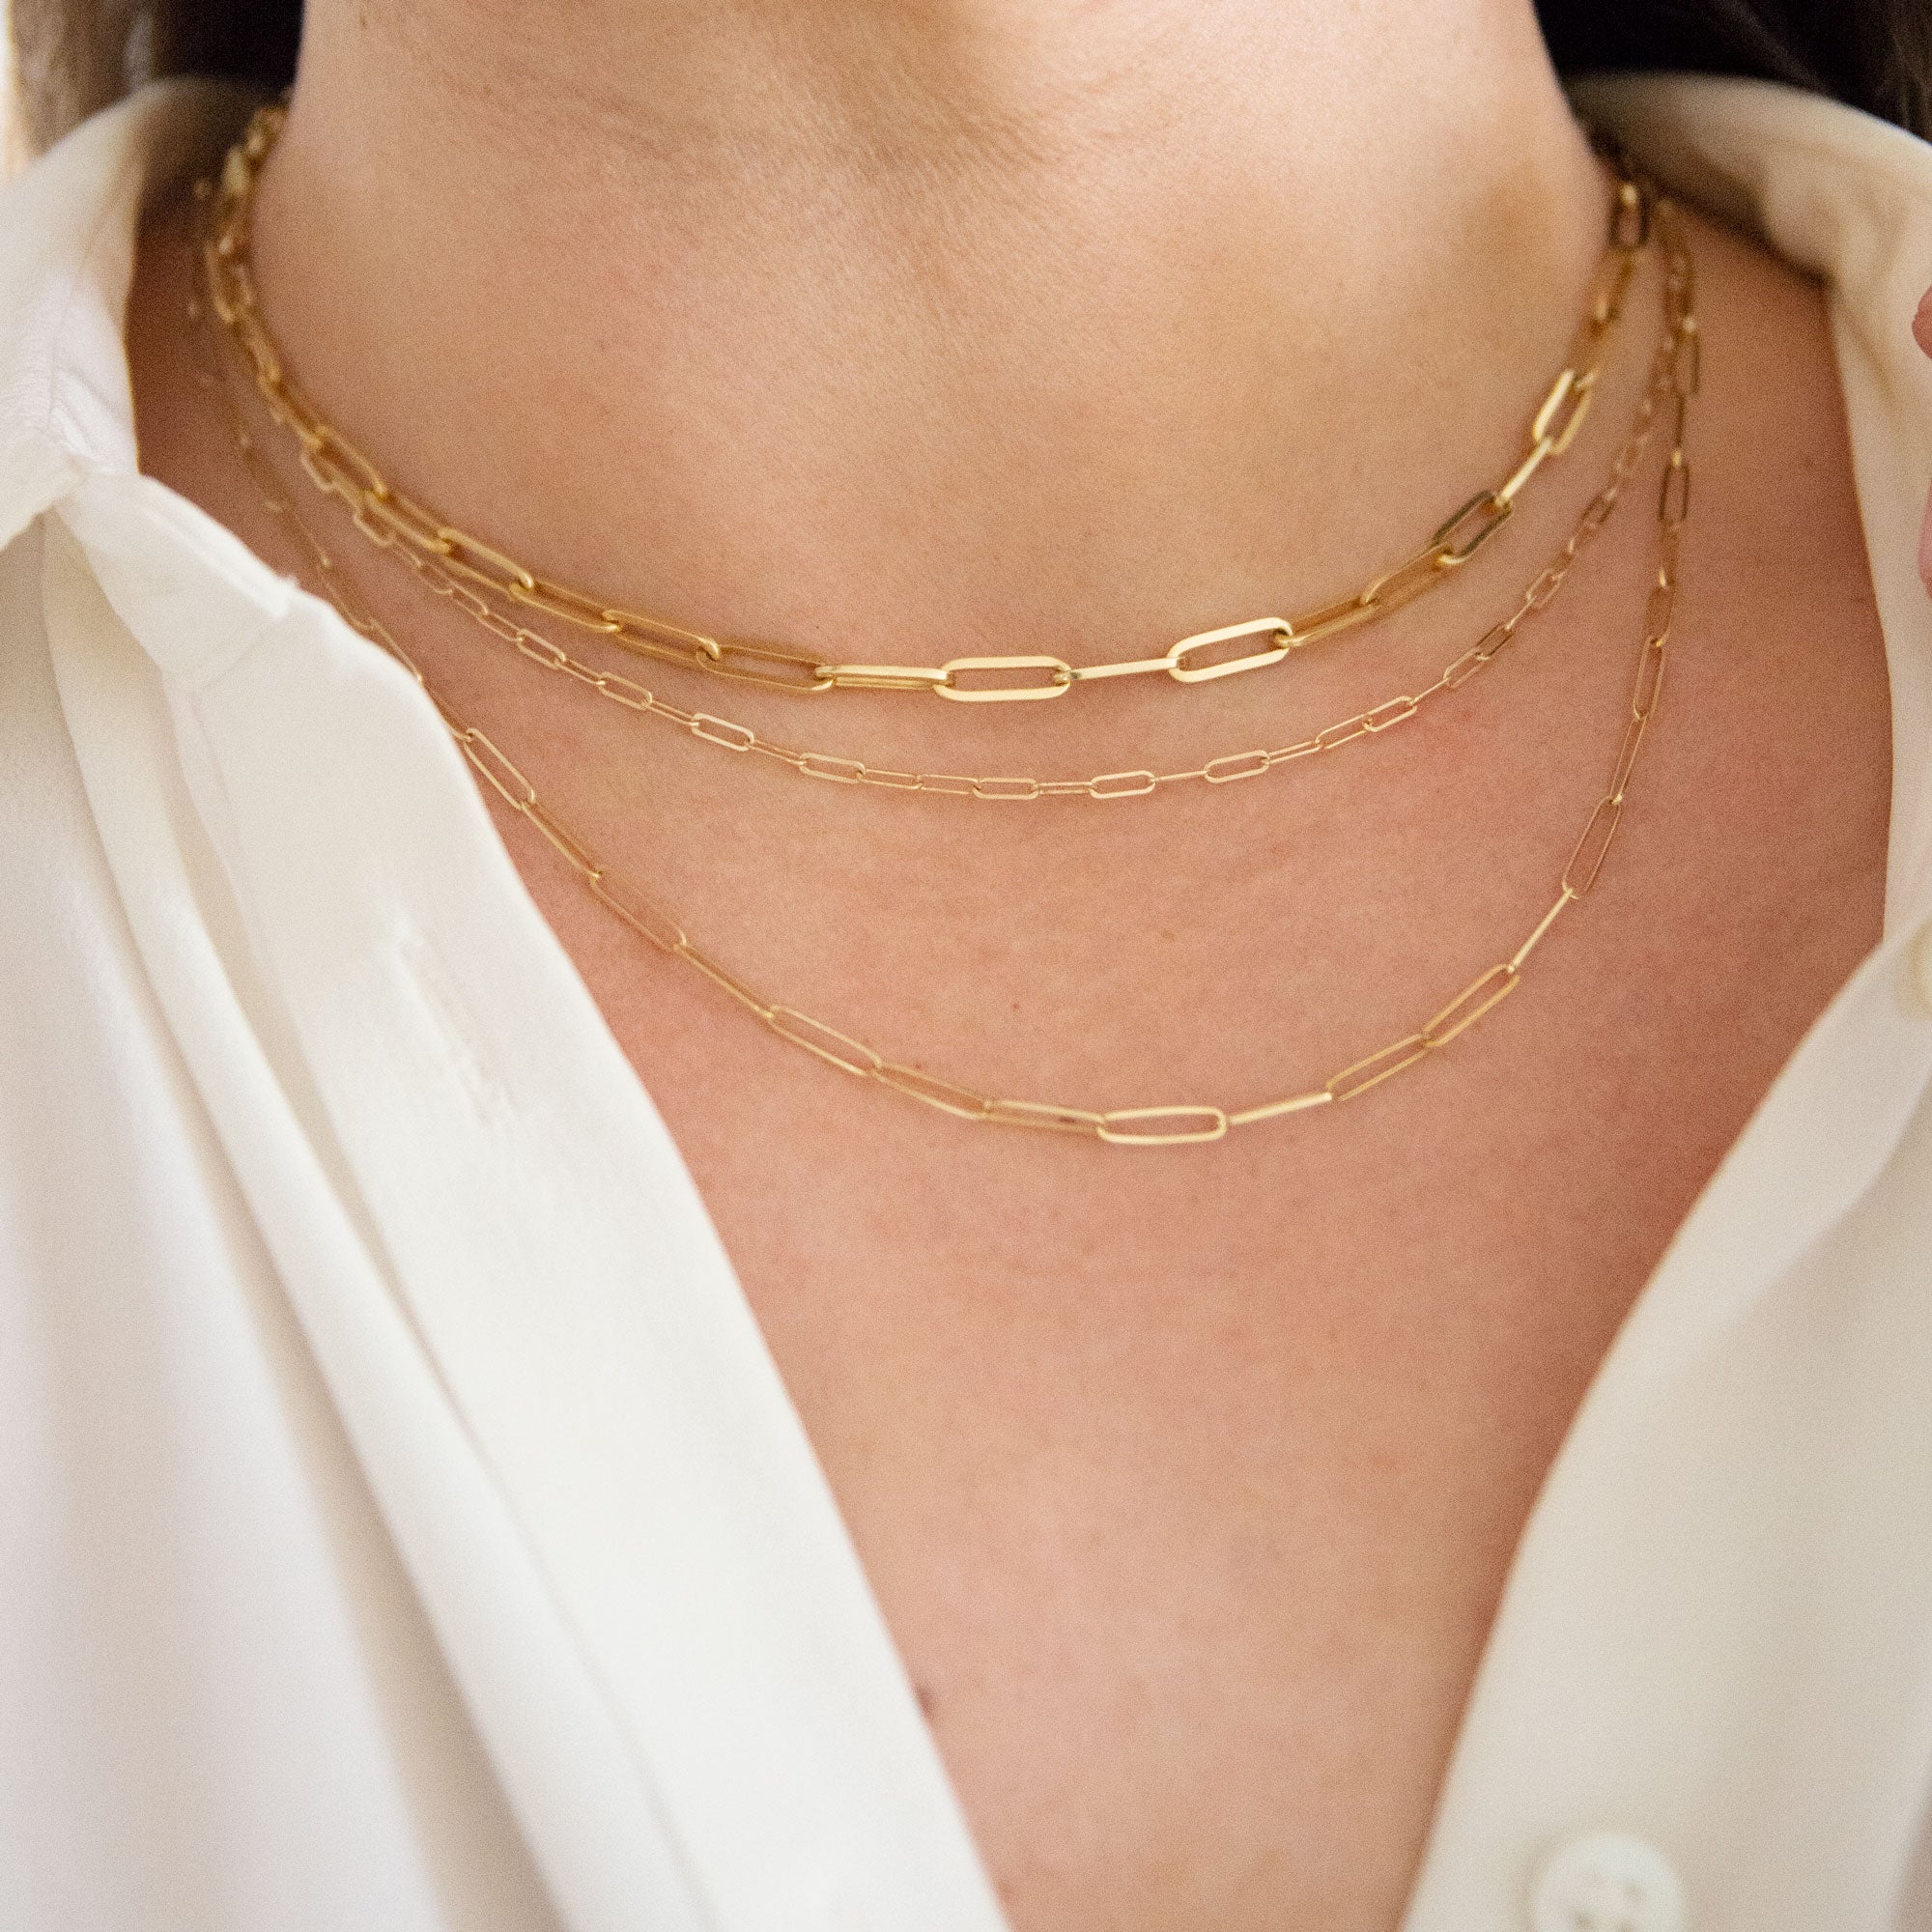 14K Paper Clip Chain Necklace - Medium Weight - Vana Chupp Studio